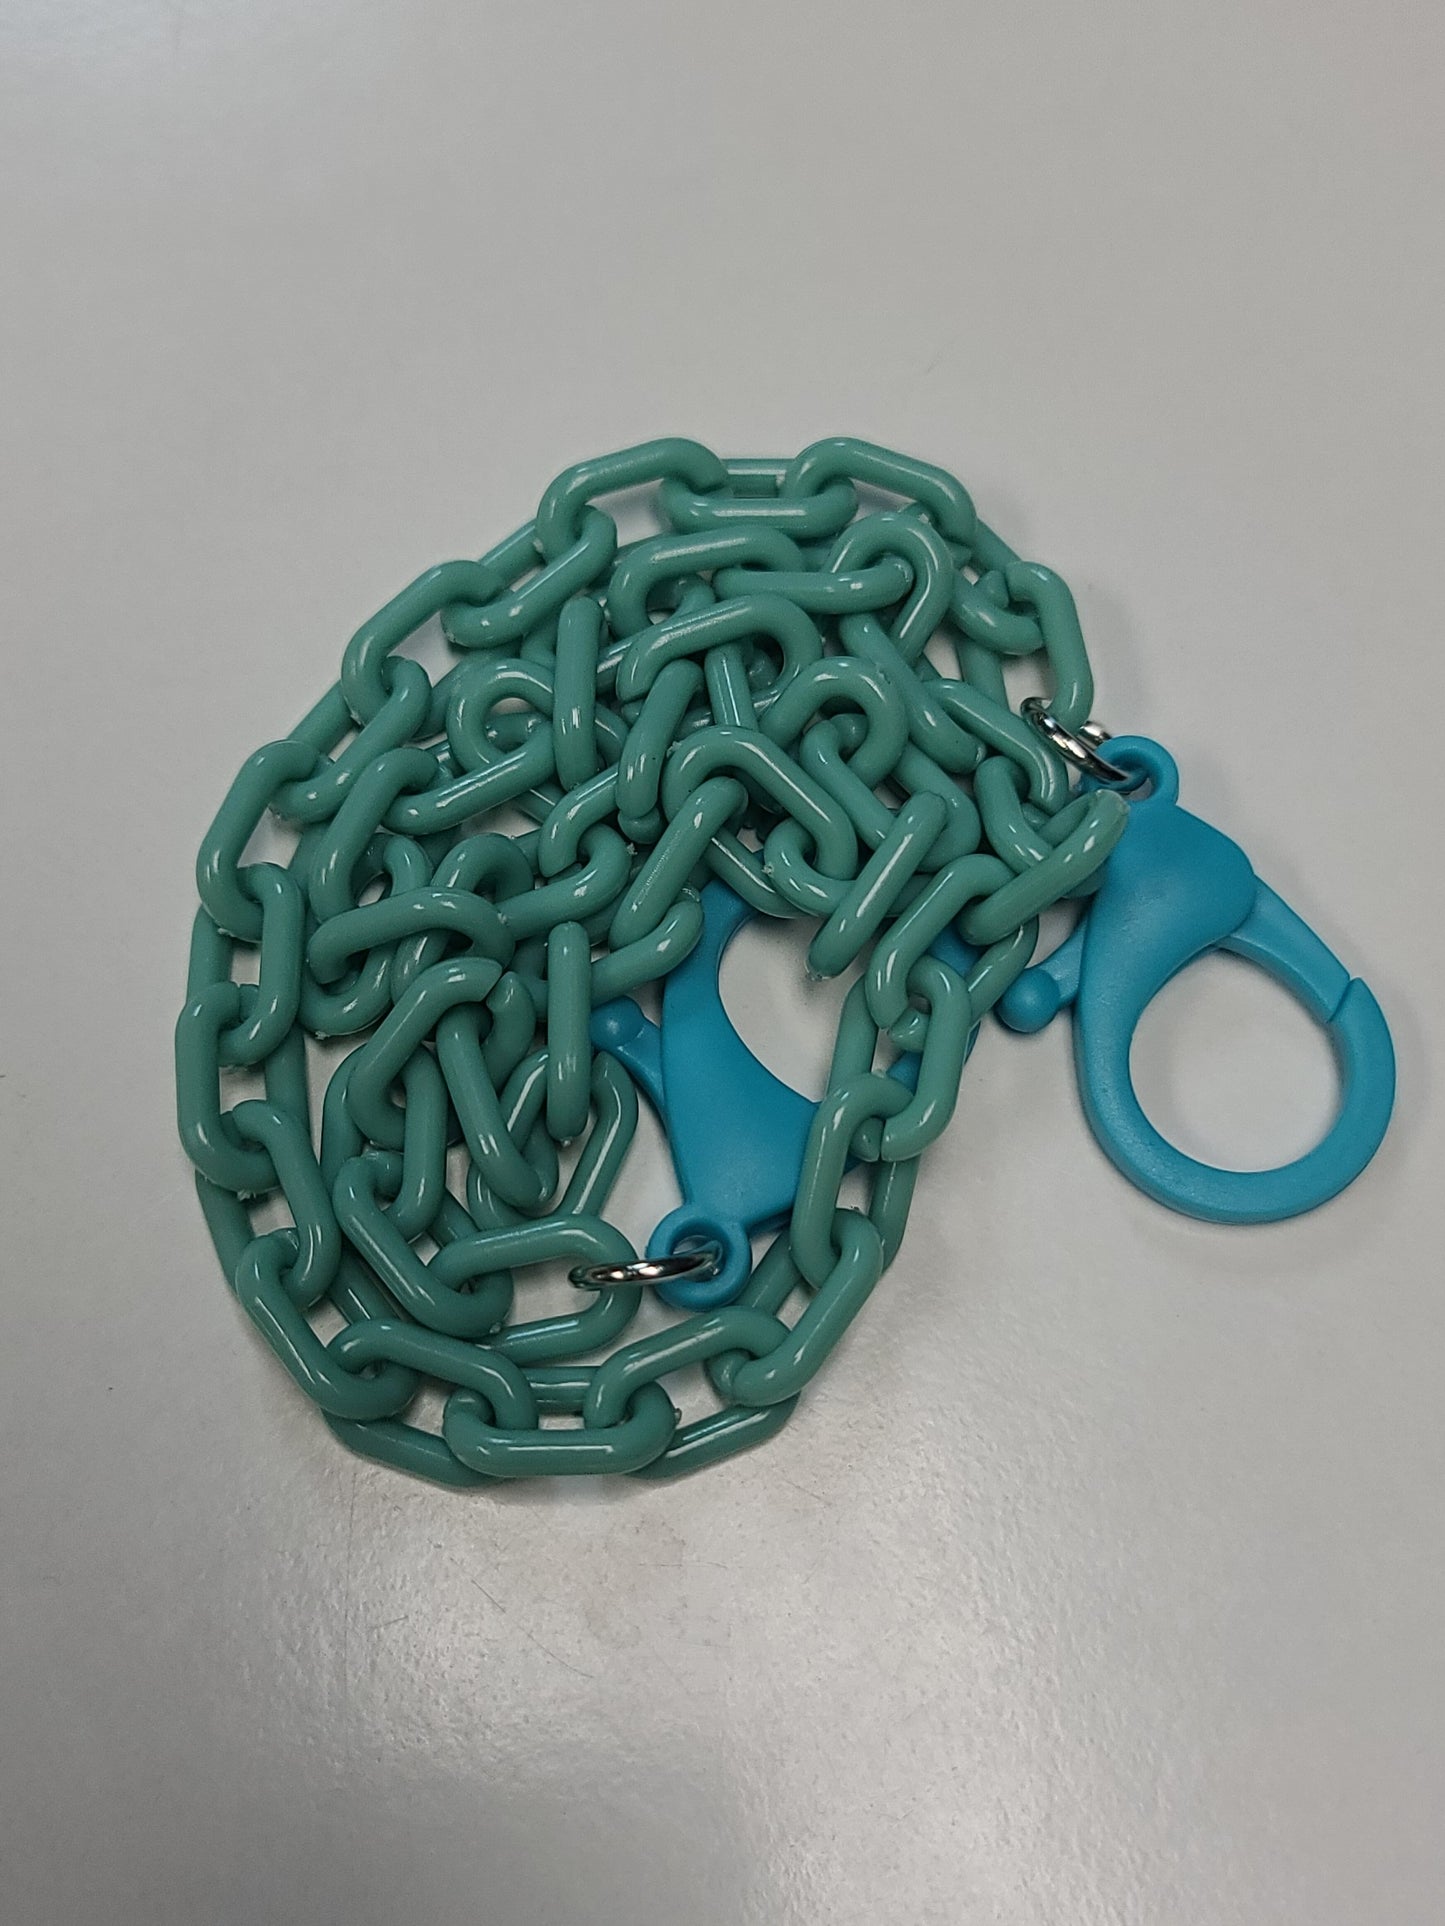 Plastic Mask Holder Chain